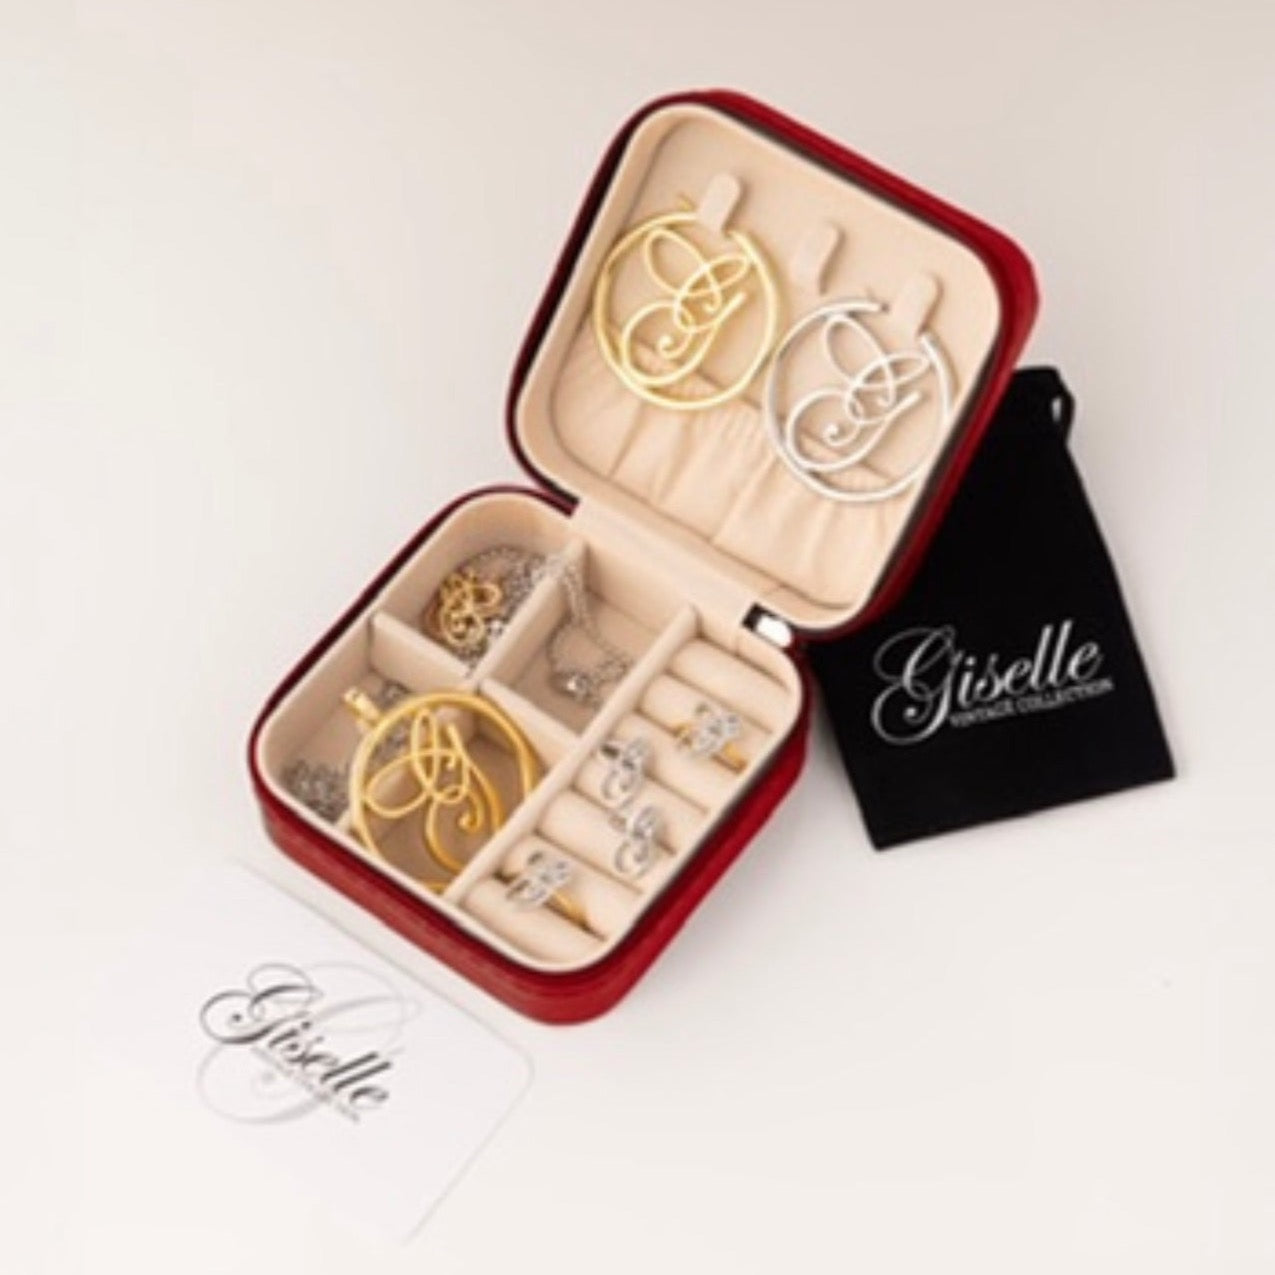 Giselle Sp Ed Jewelry Box Traveler